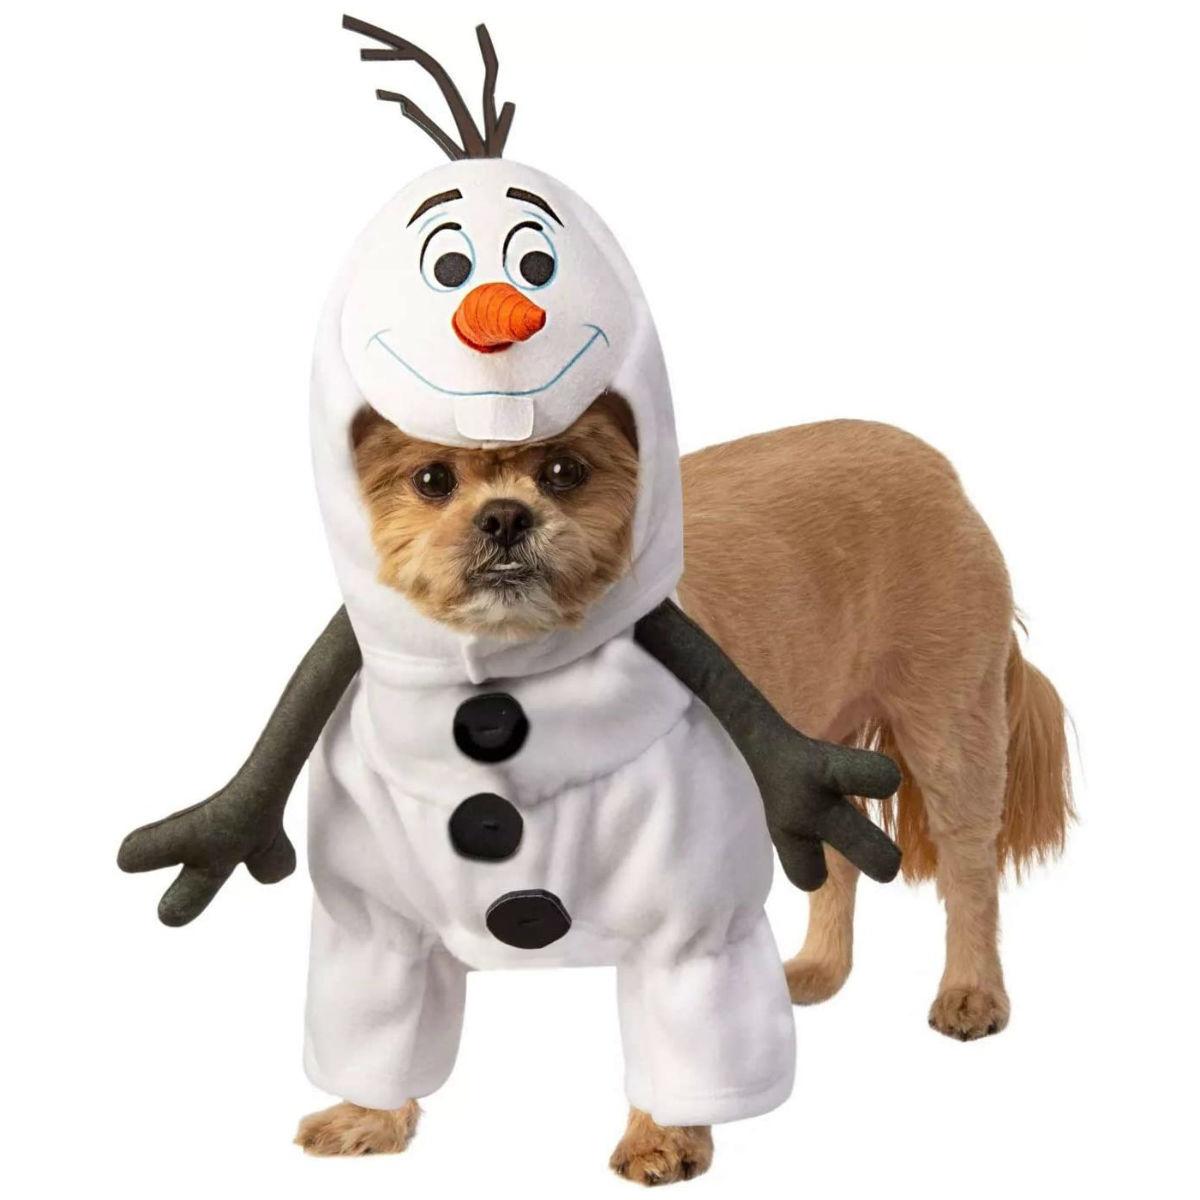 Rubie's Frozen 2 Olaf Dog Costume